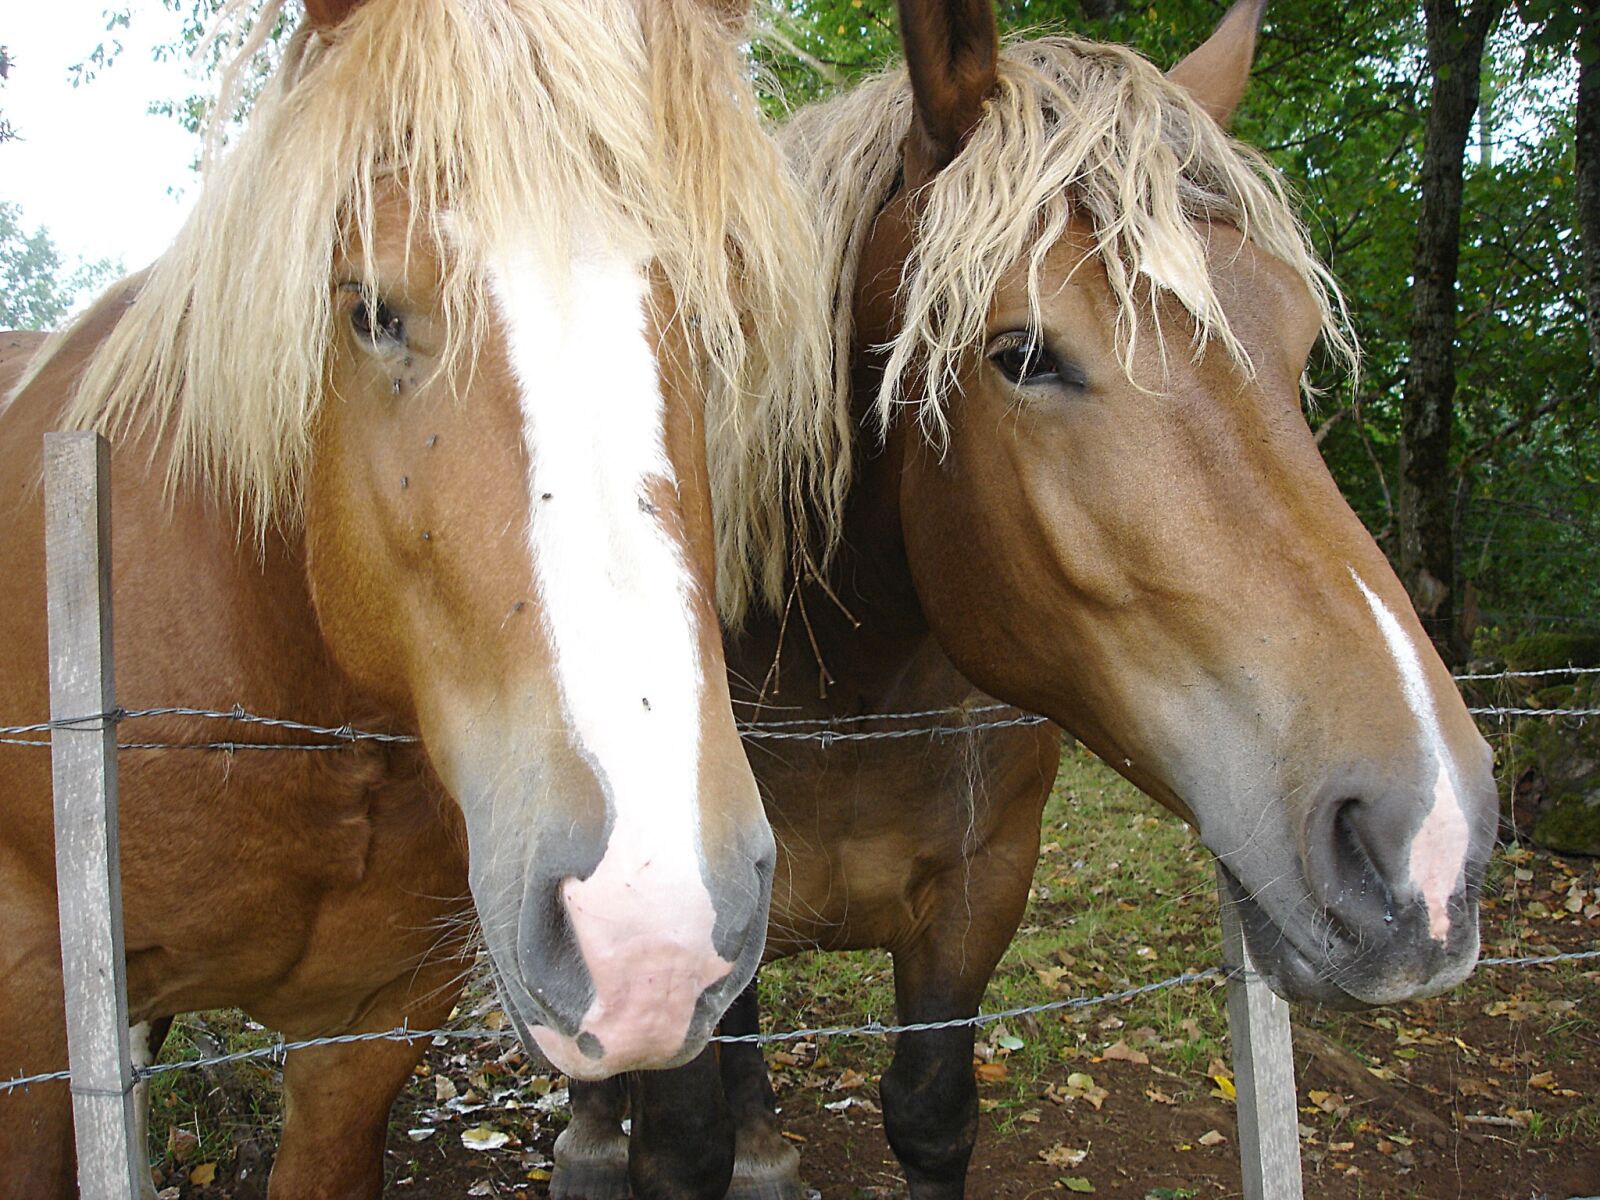 Sony DSC-P100 sample photo. Horses, horseback riding, nature photography